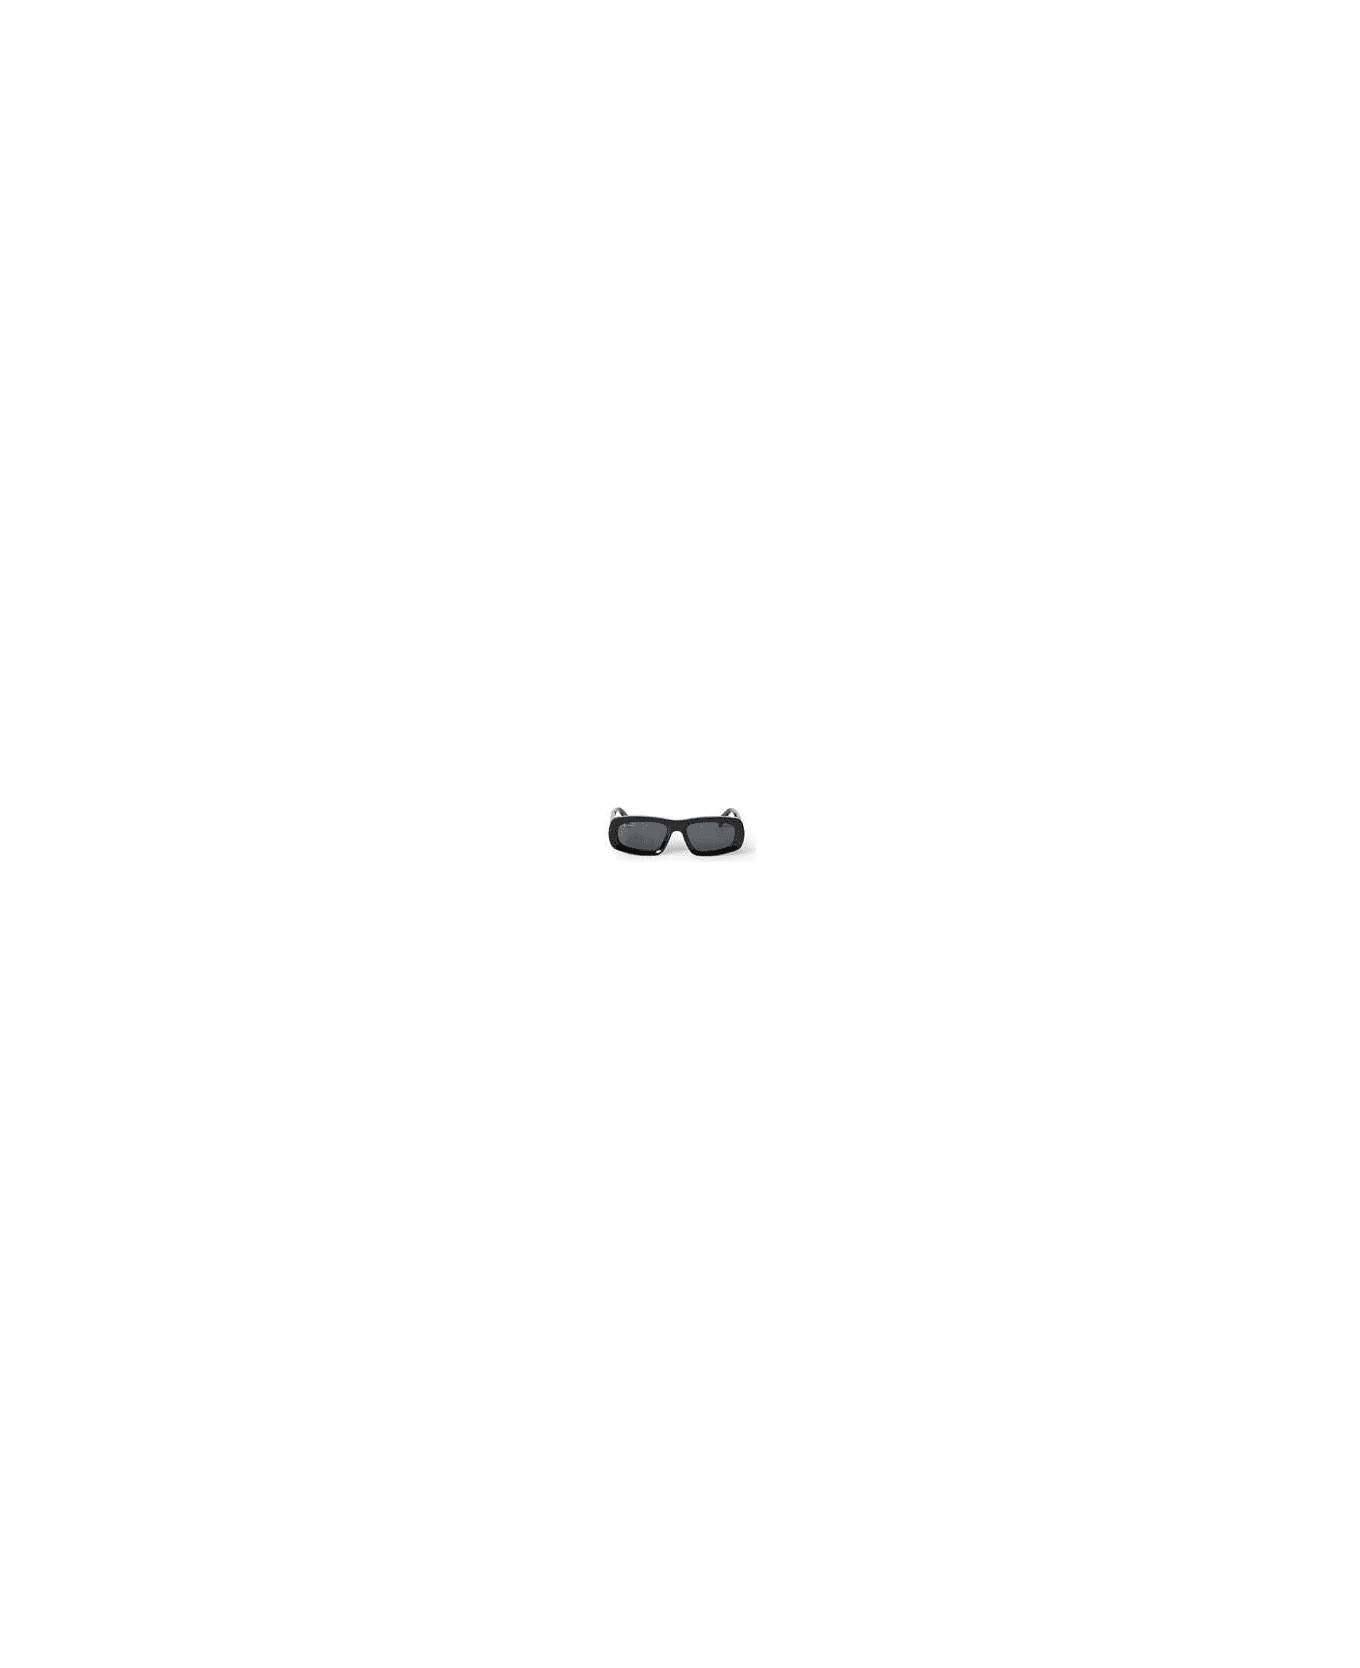 Off-White AUSTIN SUNGLASSES Sunglasses - Black サングラス